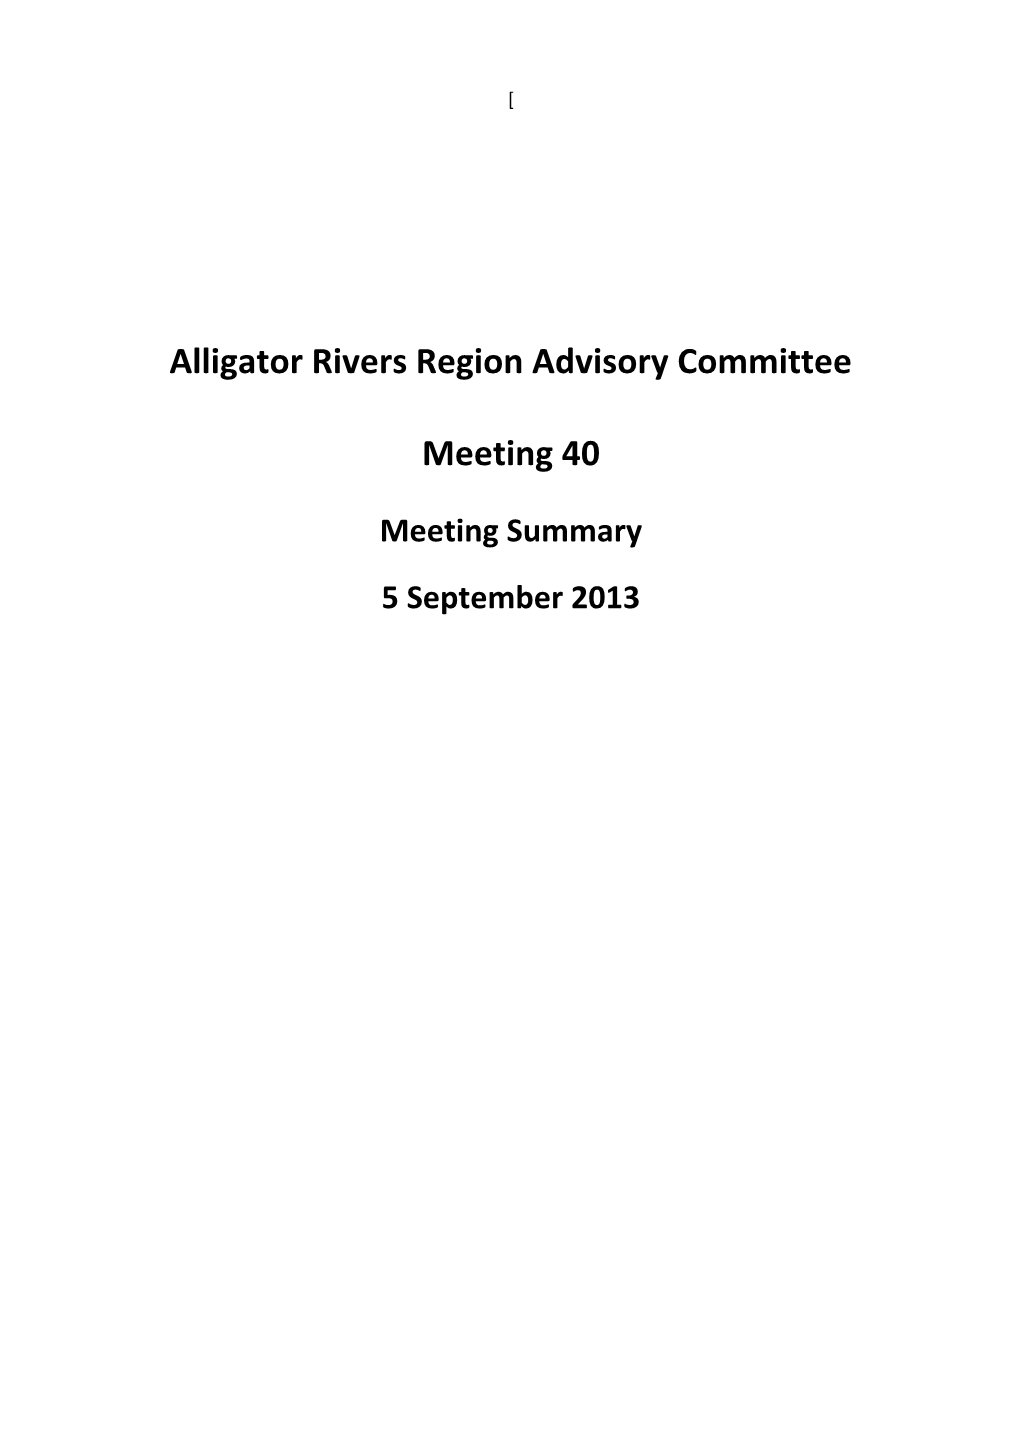 Meeting Summary - Alligator Rivers Region Advisory Committee Meeting 40